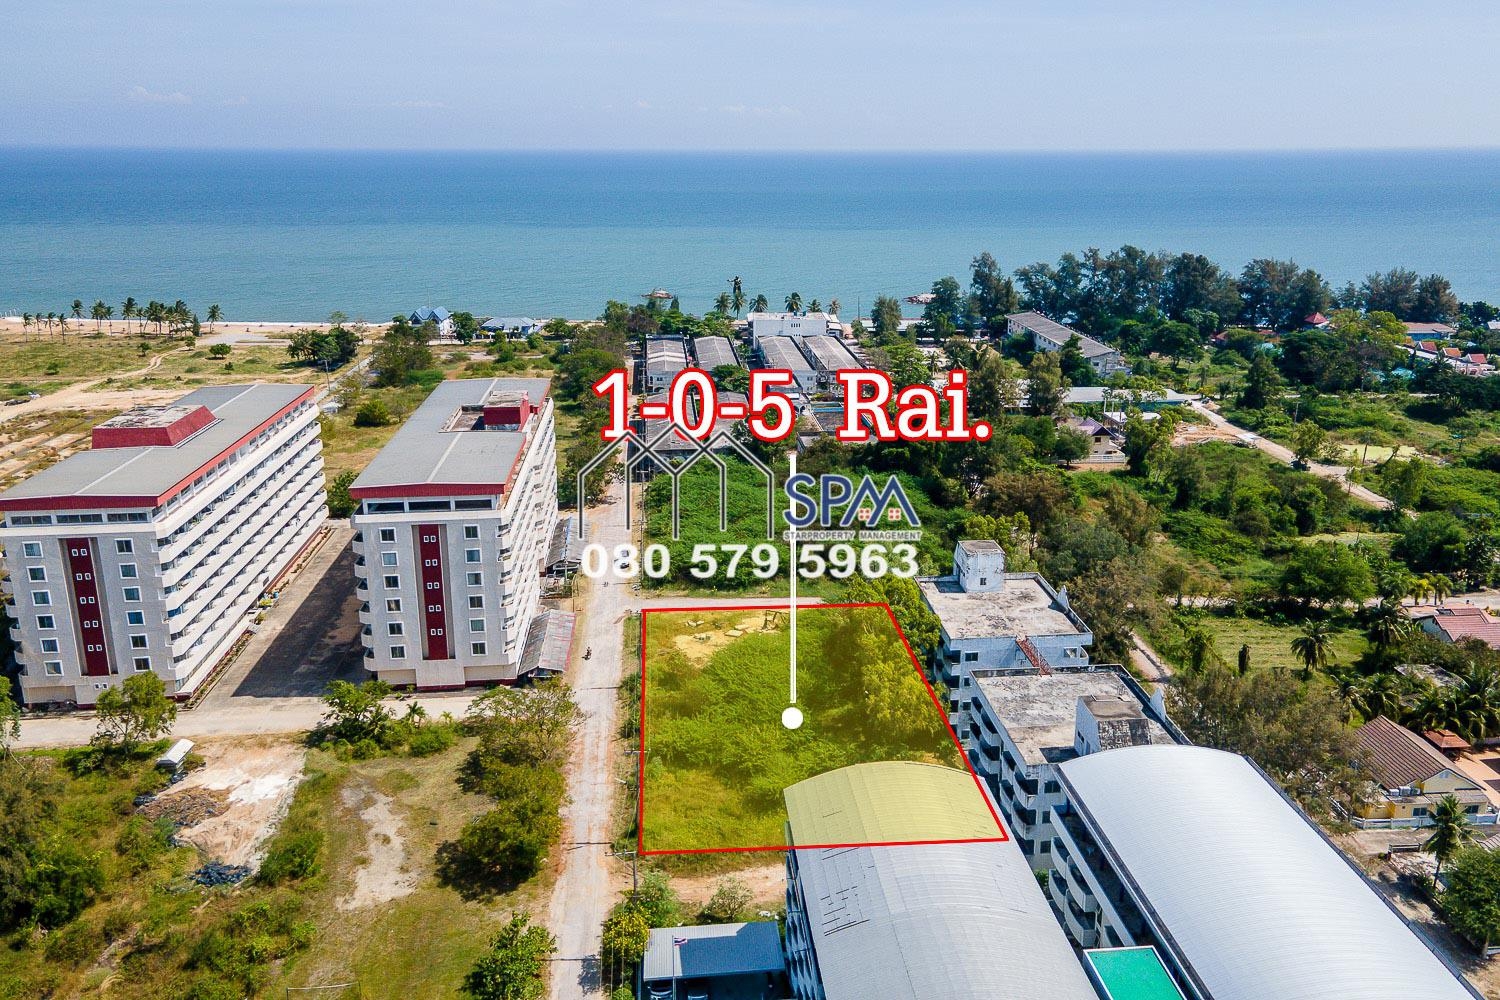 HOT DEAL Land near Puktien Beach for Sale, Land Area 1 Rai 5 sq.wah (1620 sq.m.),Price 6.5 Million Baht